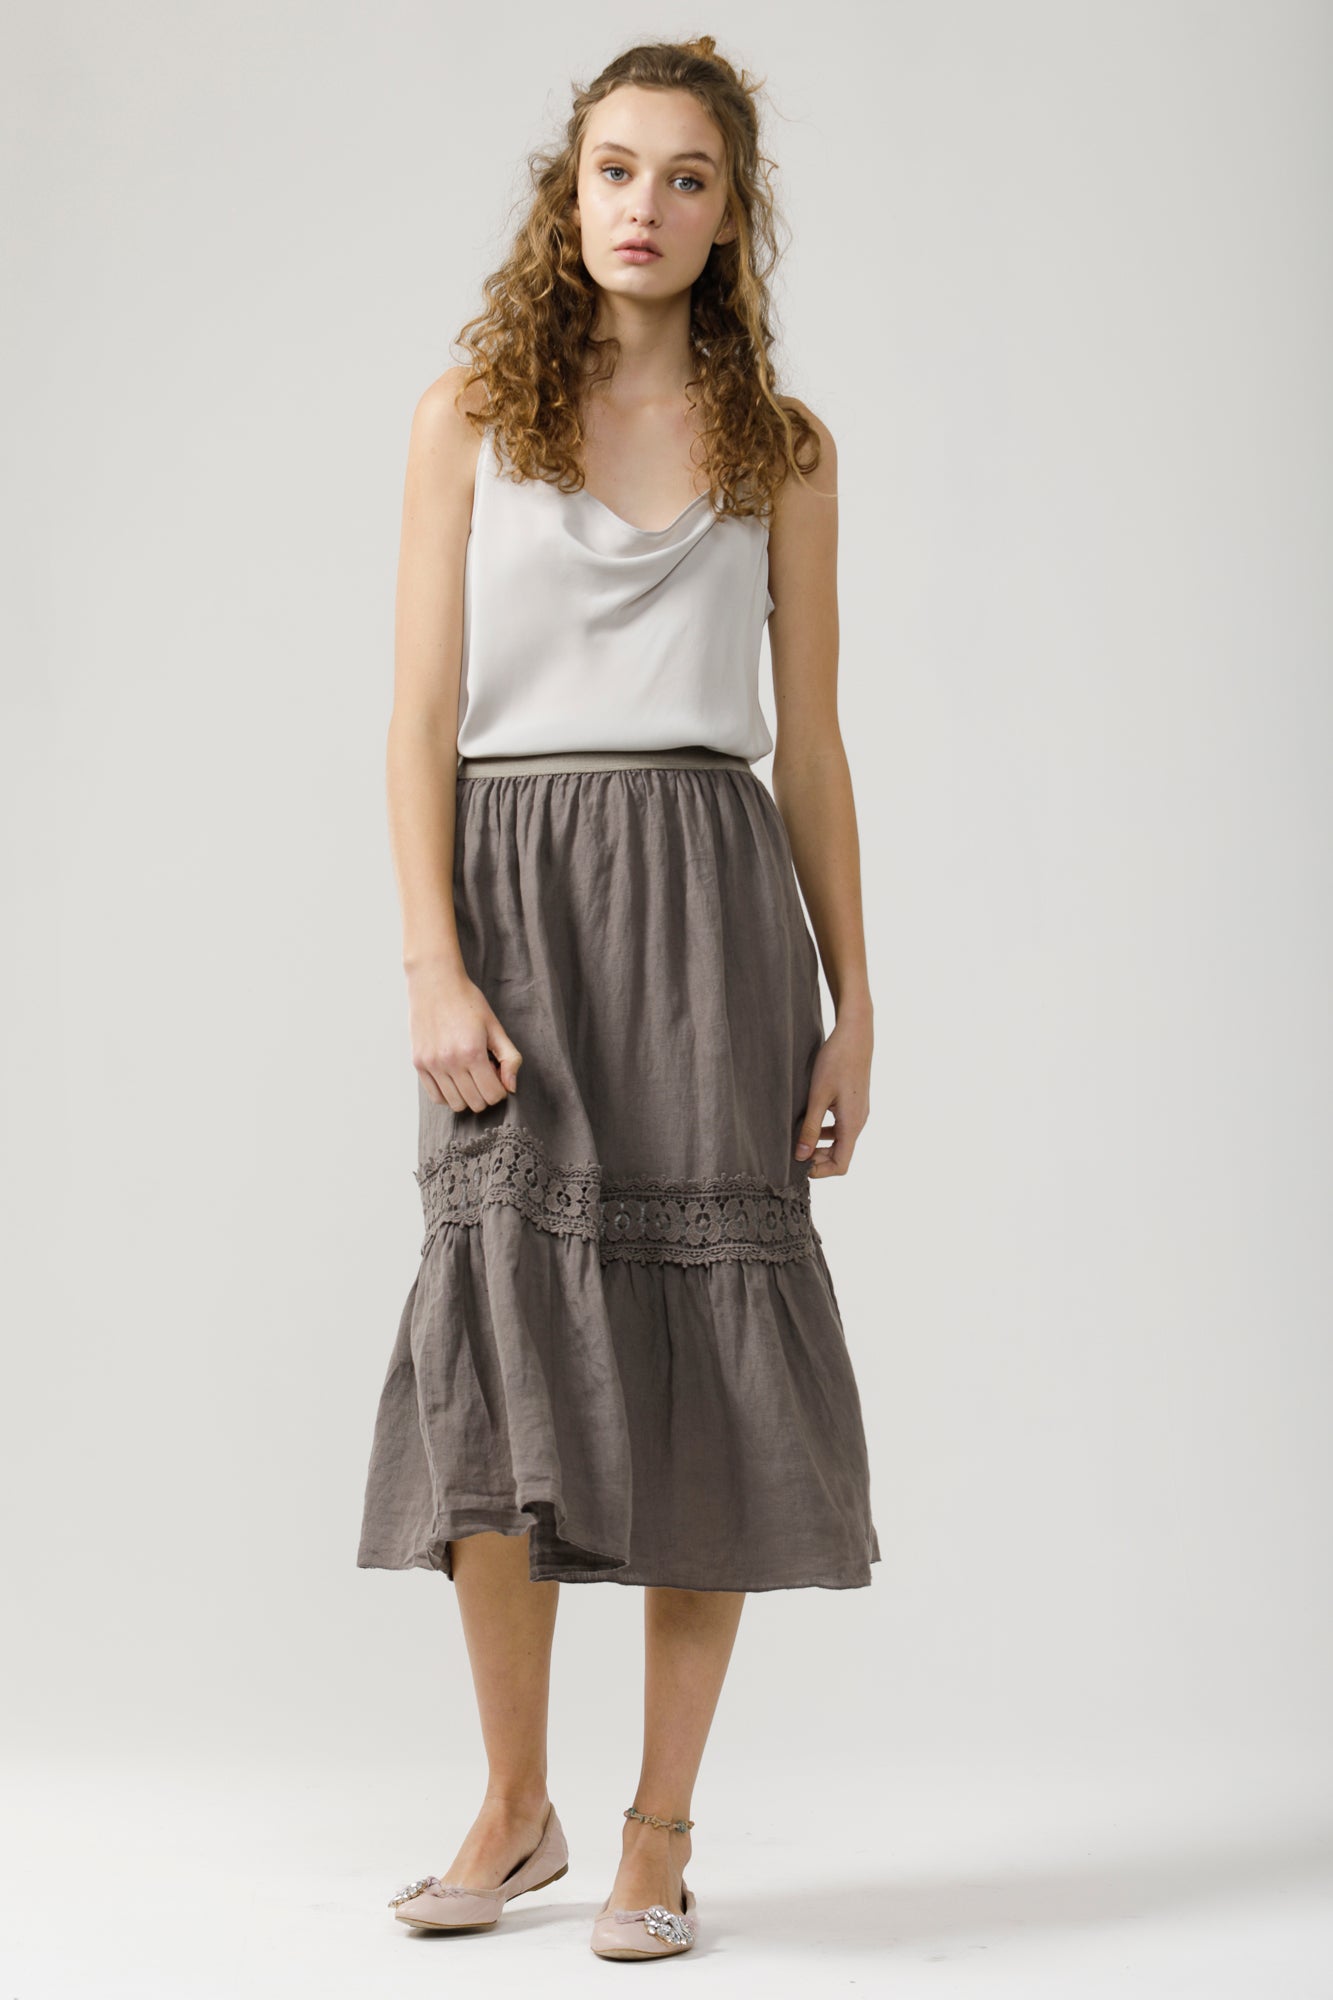 Linen and lace Capri skirt.